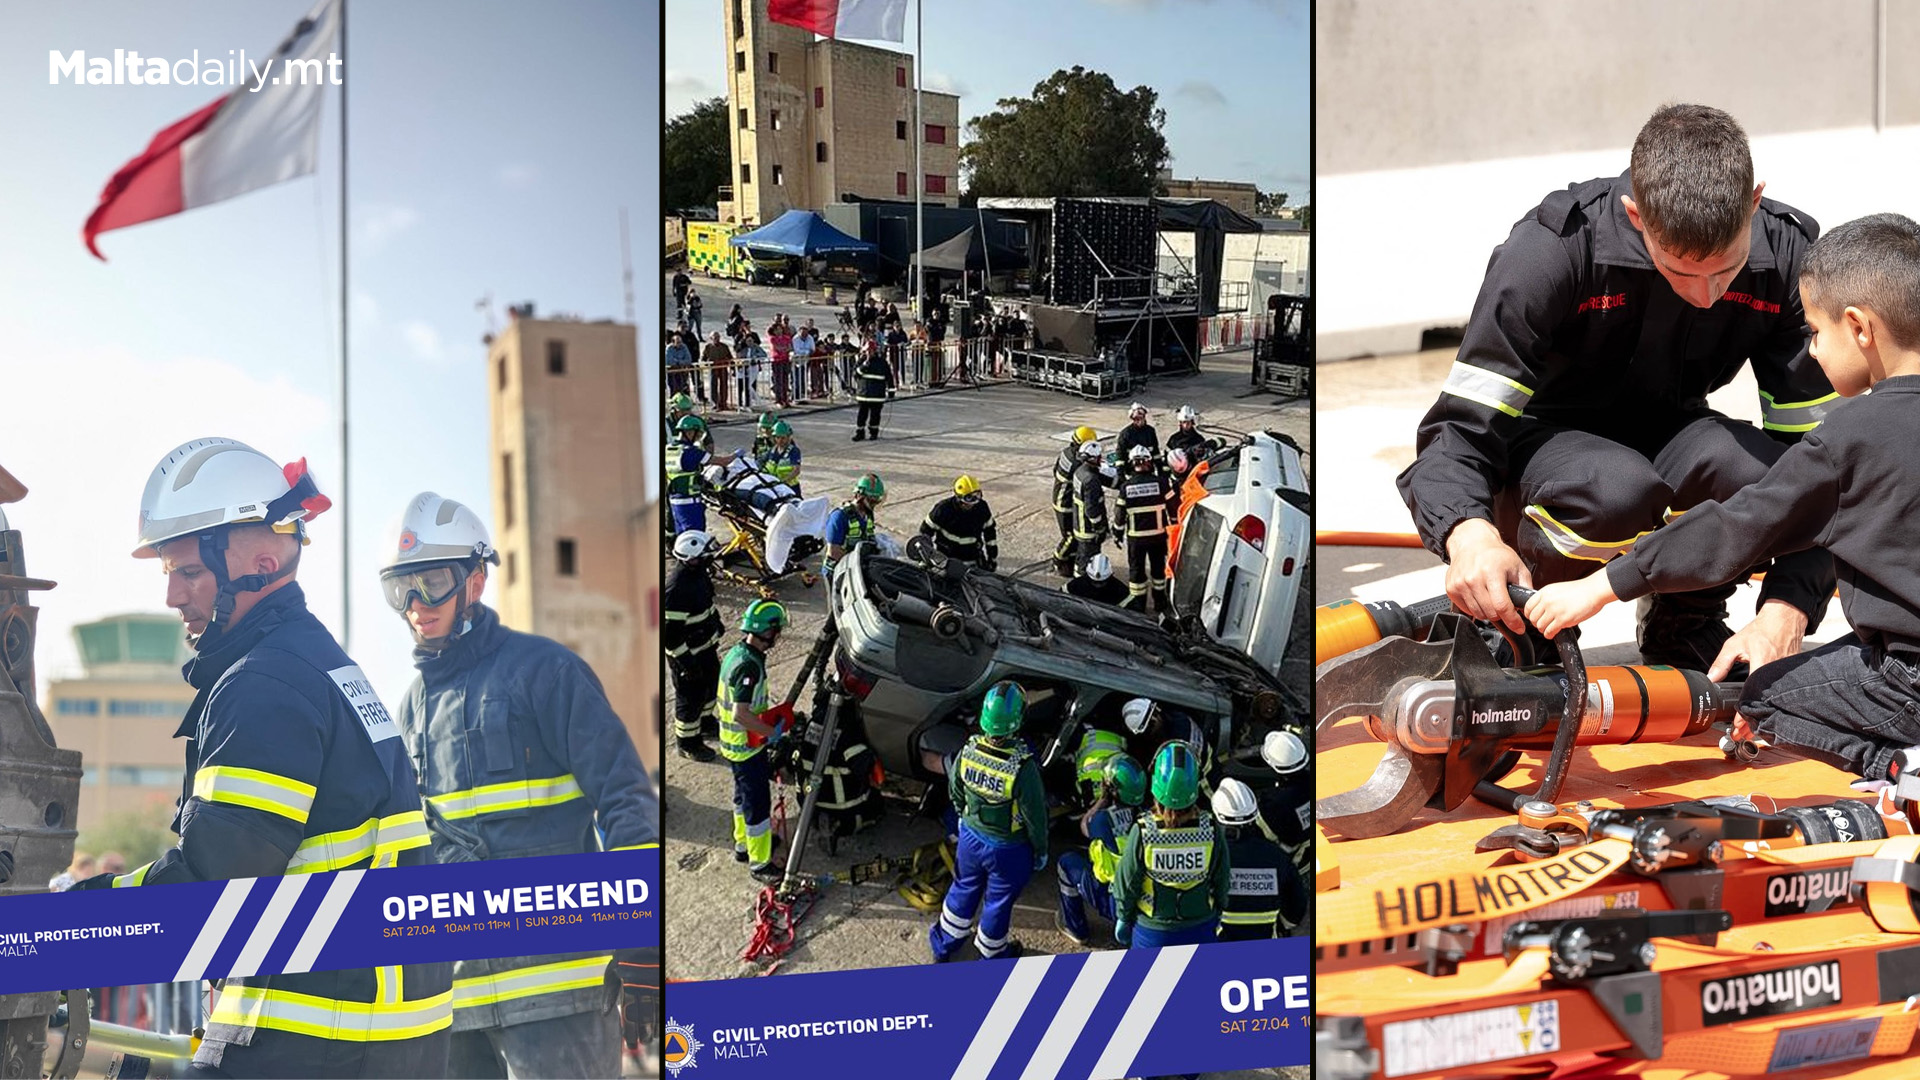 Public Attends Civil Protection Malta Open Weekend